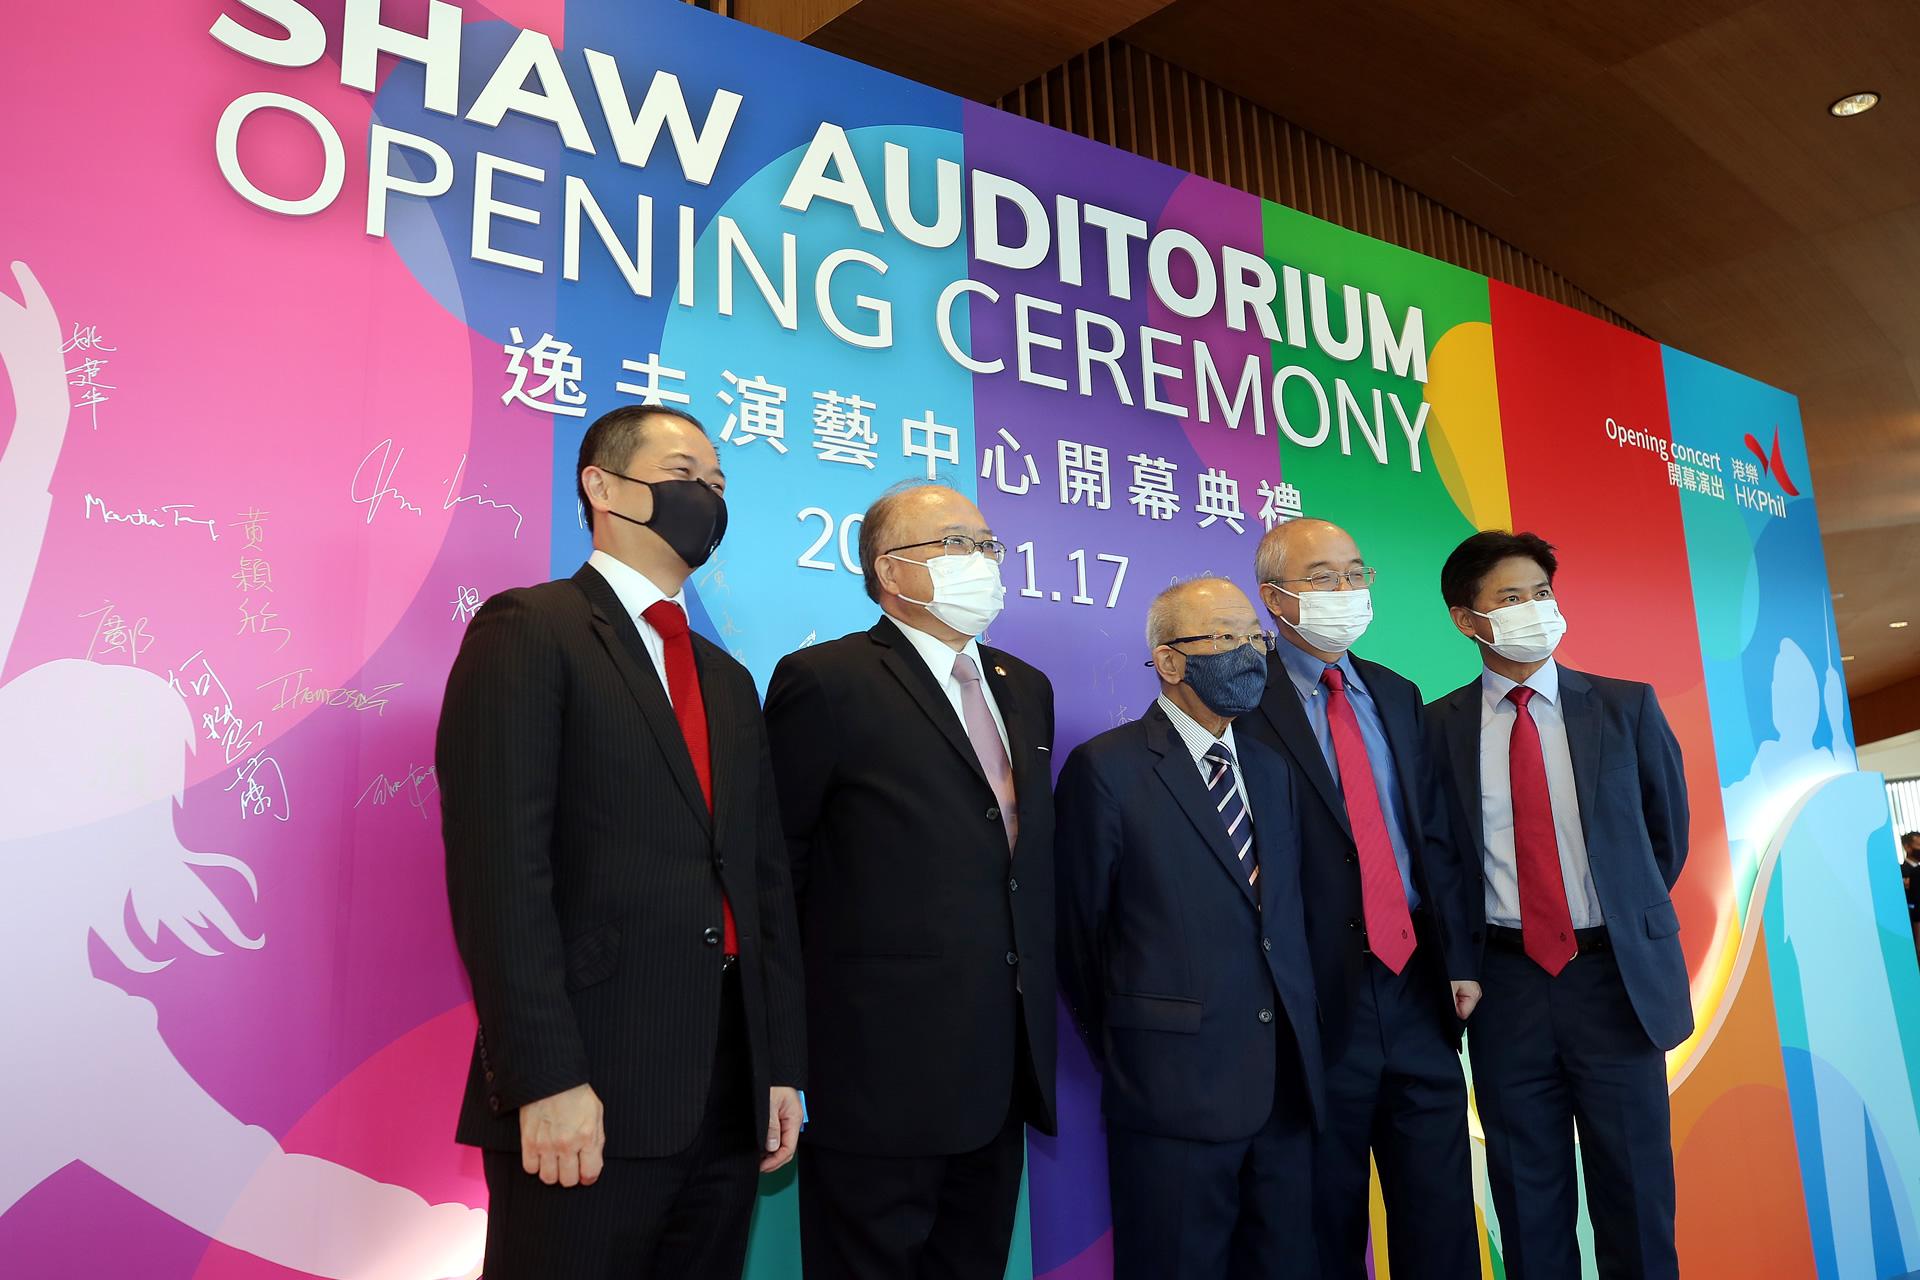  Shaw Auditorium Opening